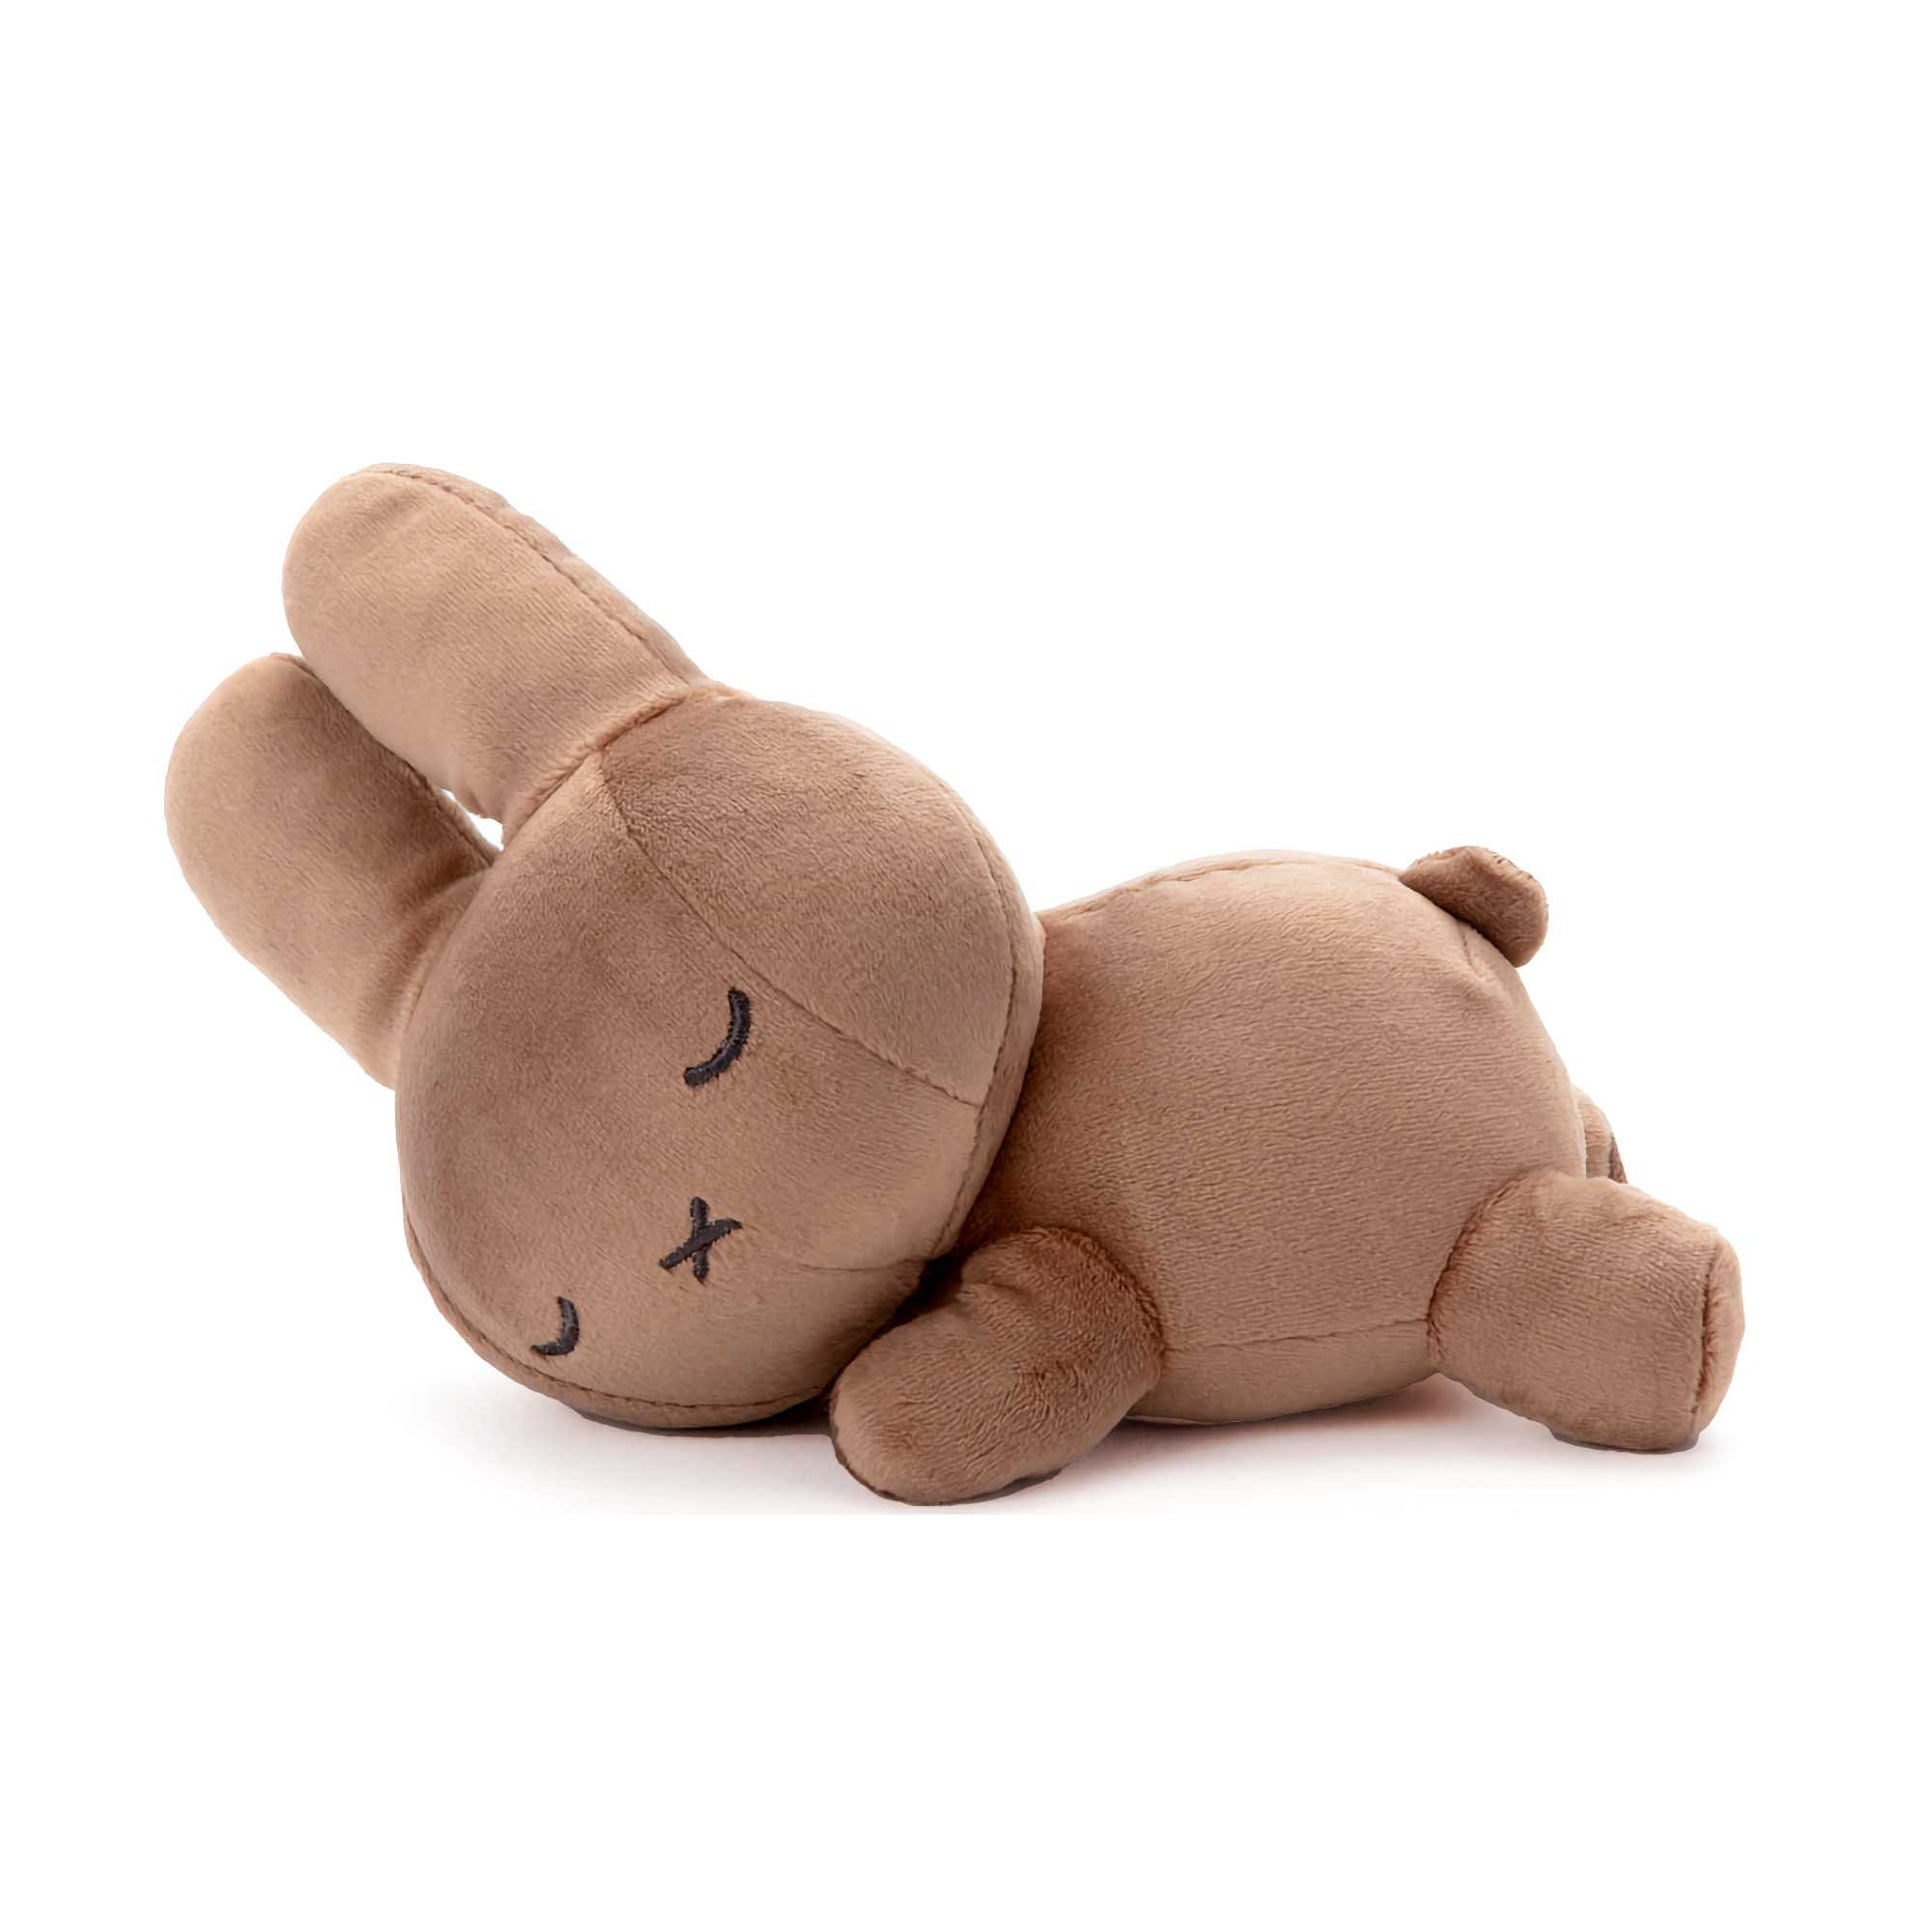 Miffy Sleeping Friend Plush Toy Small, Brown (19cm)